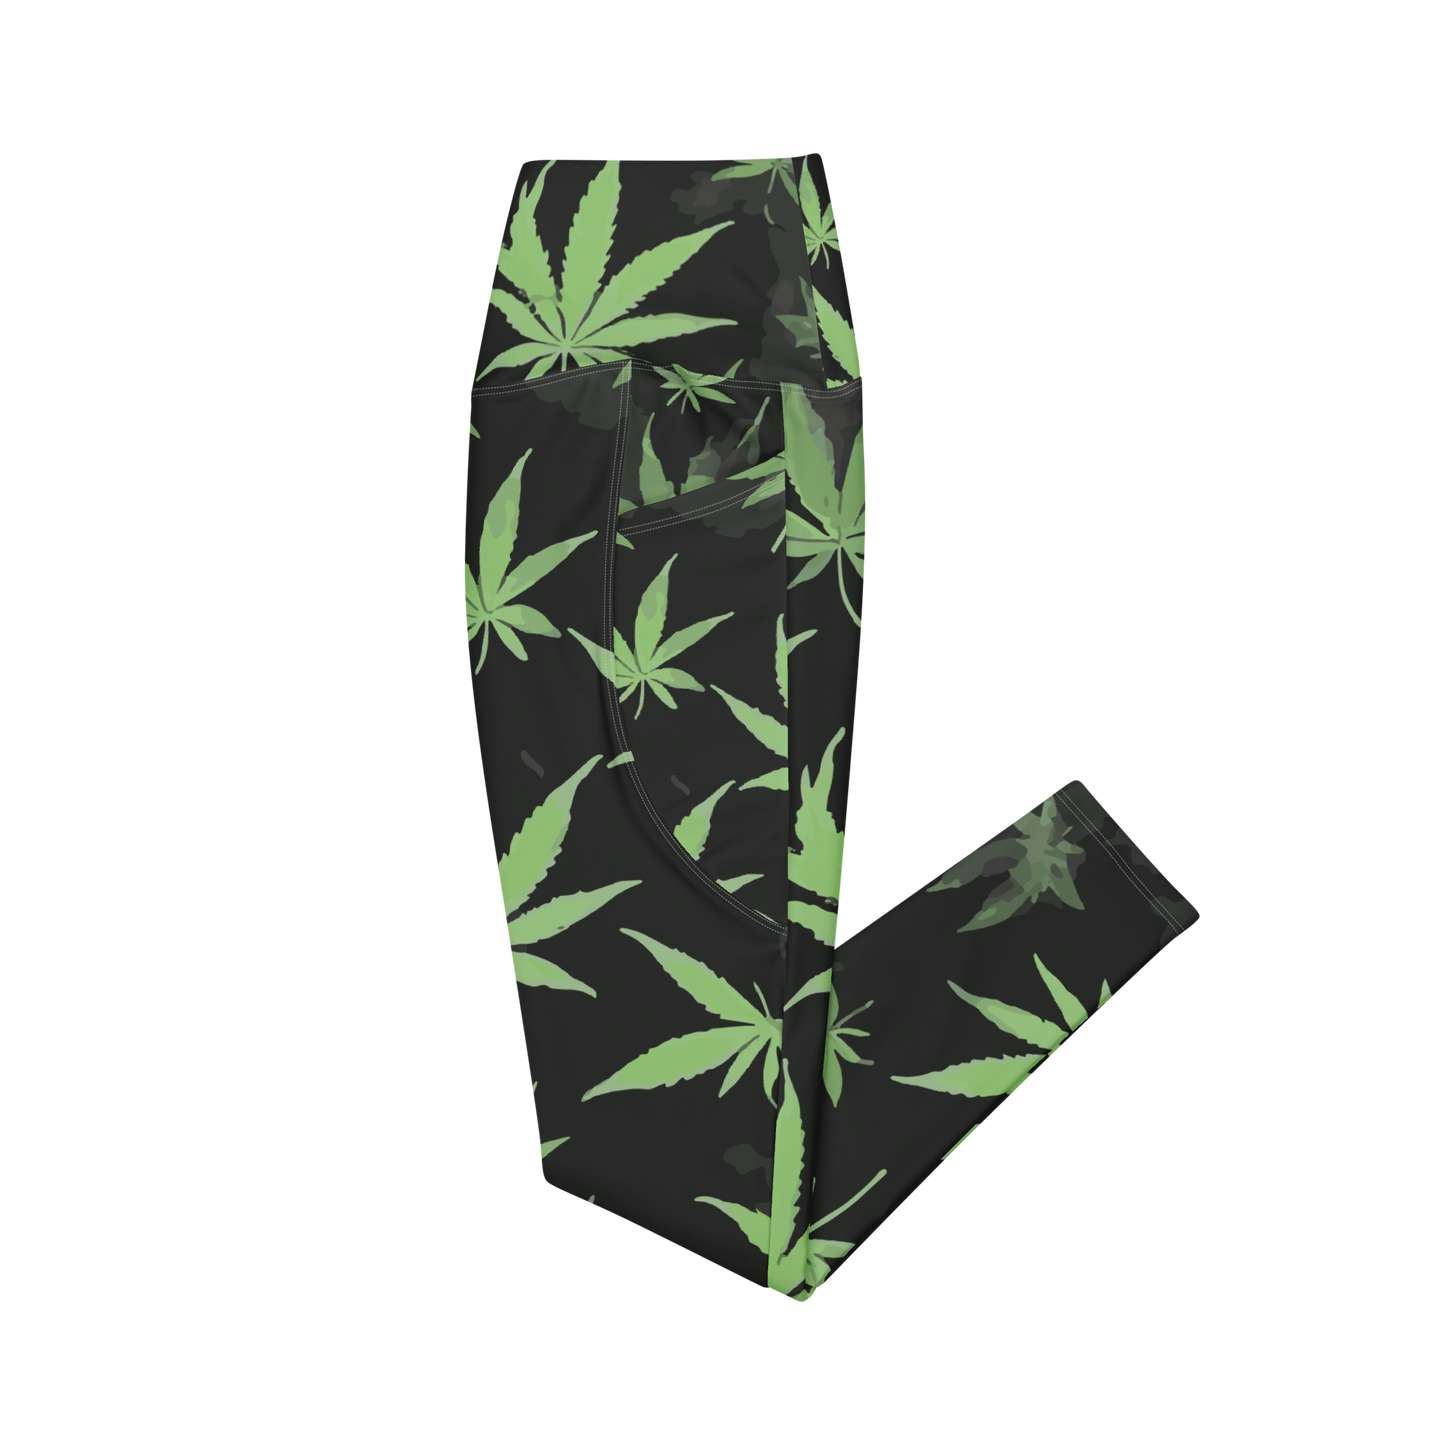 420 Sub Noize Leaf Leggings (Green / Black)